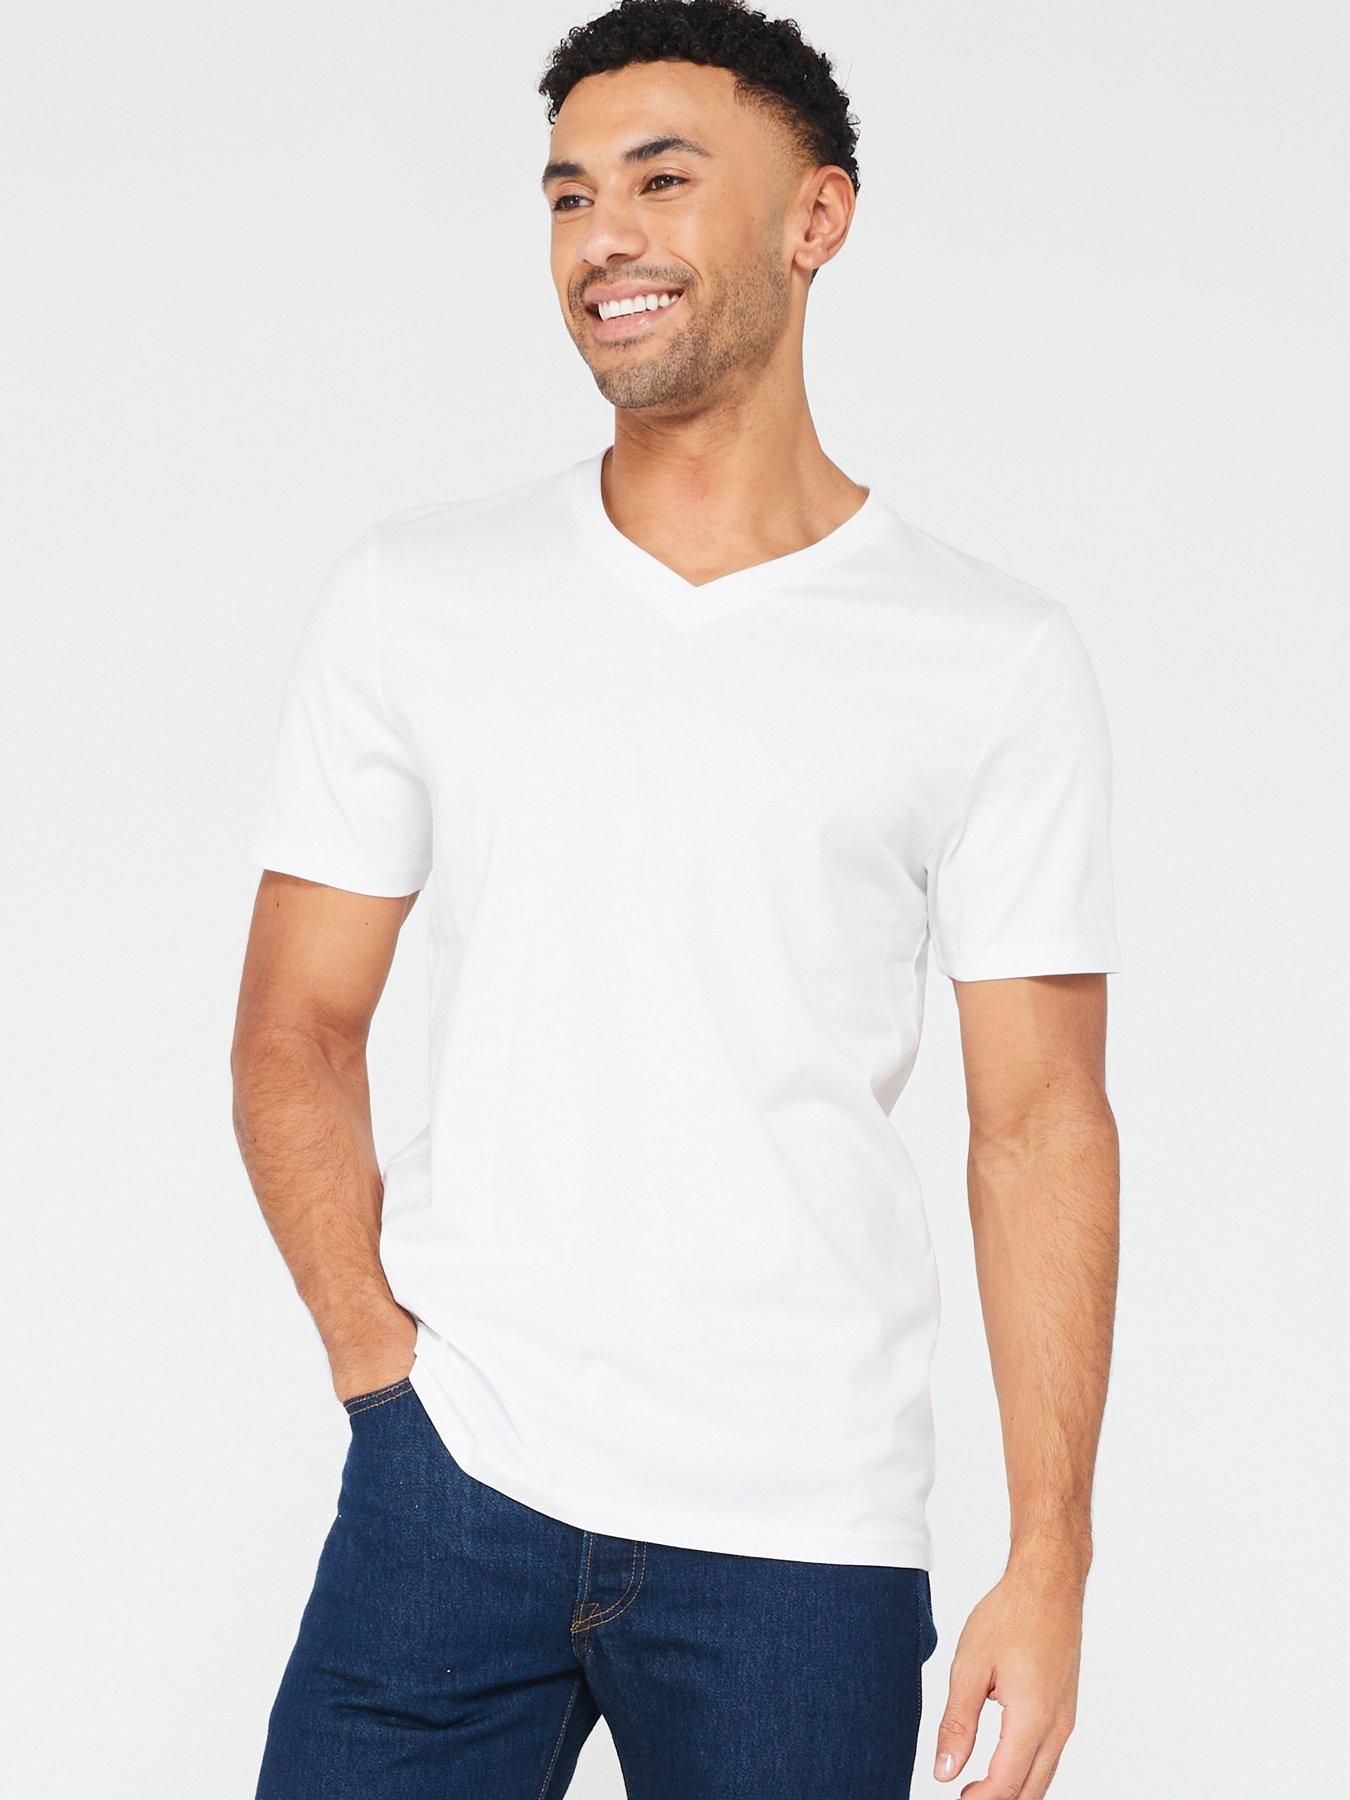 Men's White Tops, T-Shirts & Polos